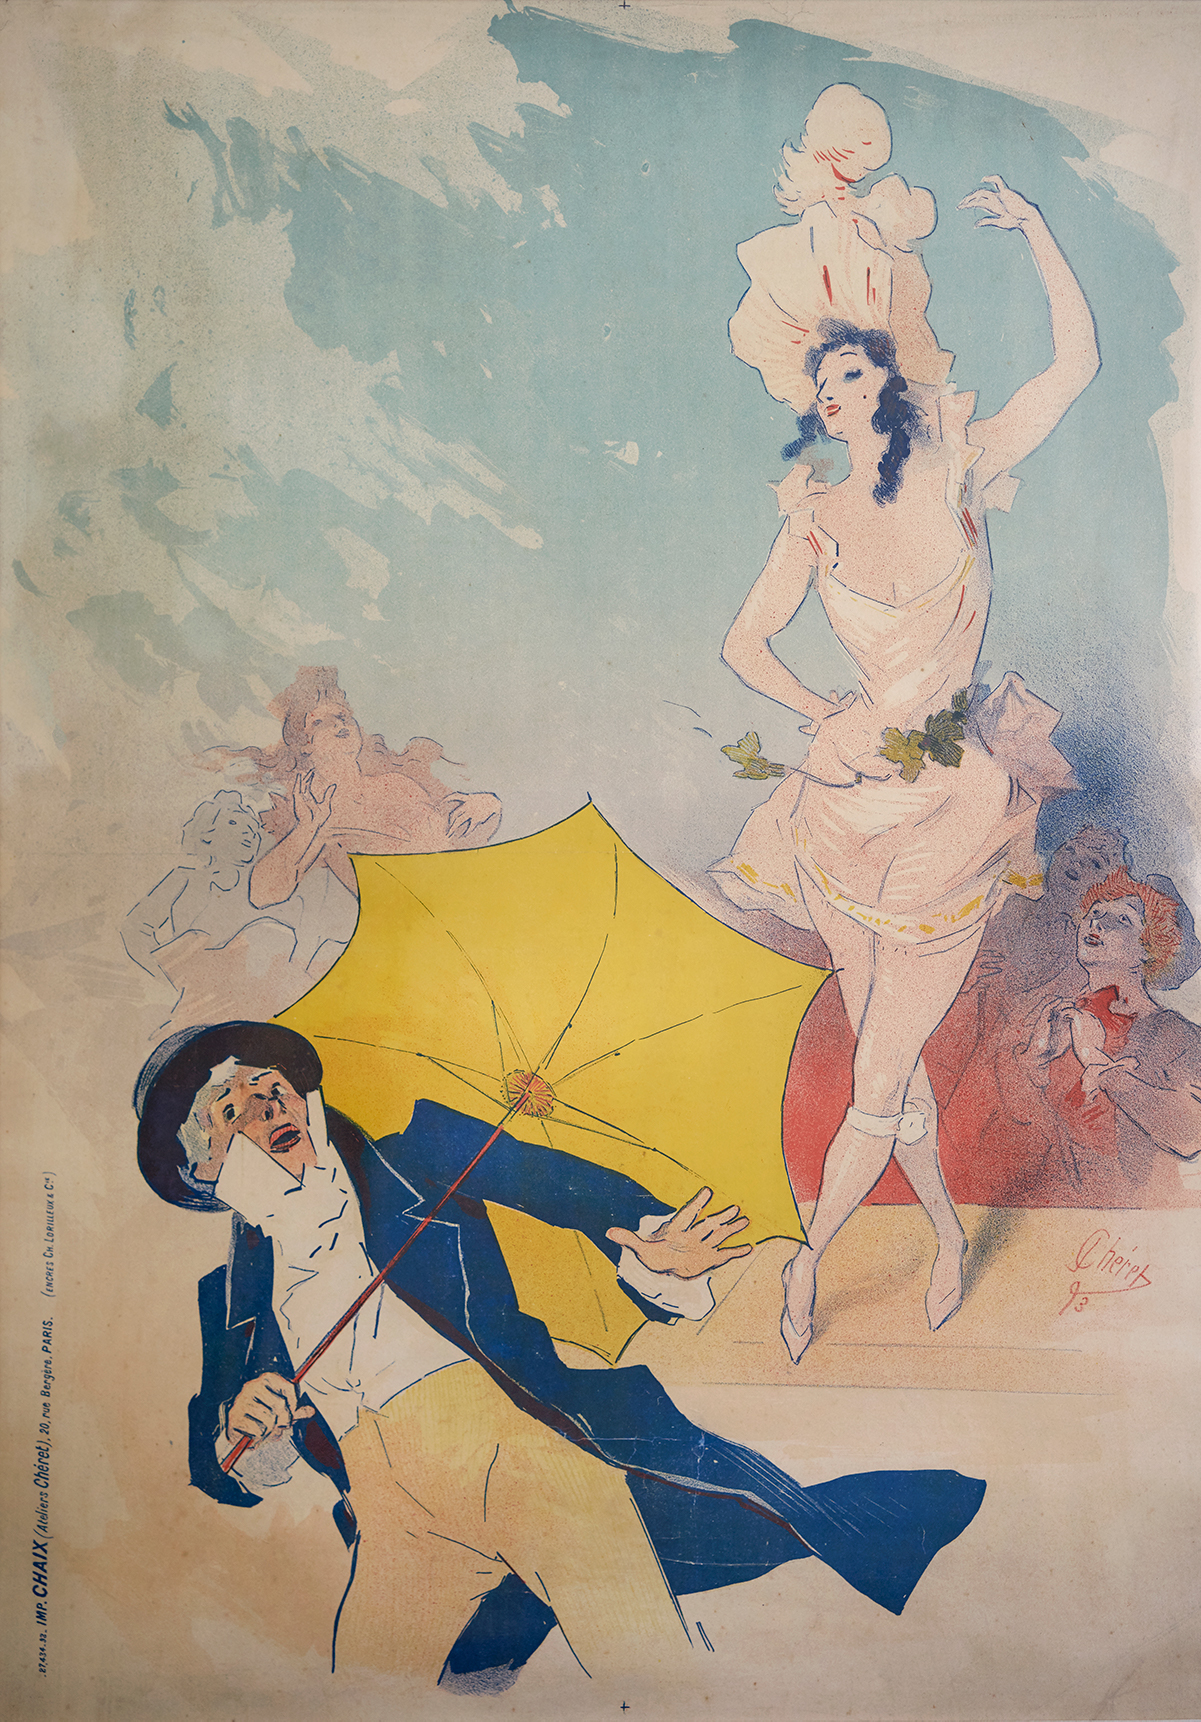 A dancer performs for a man holding an umbrella.